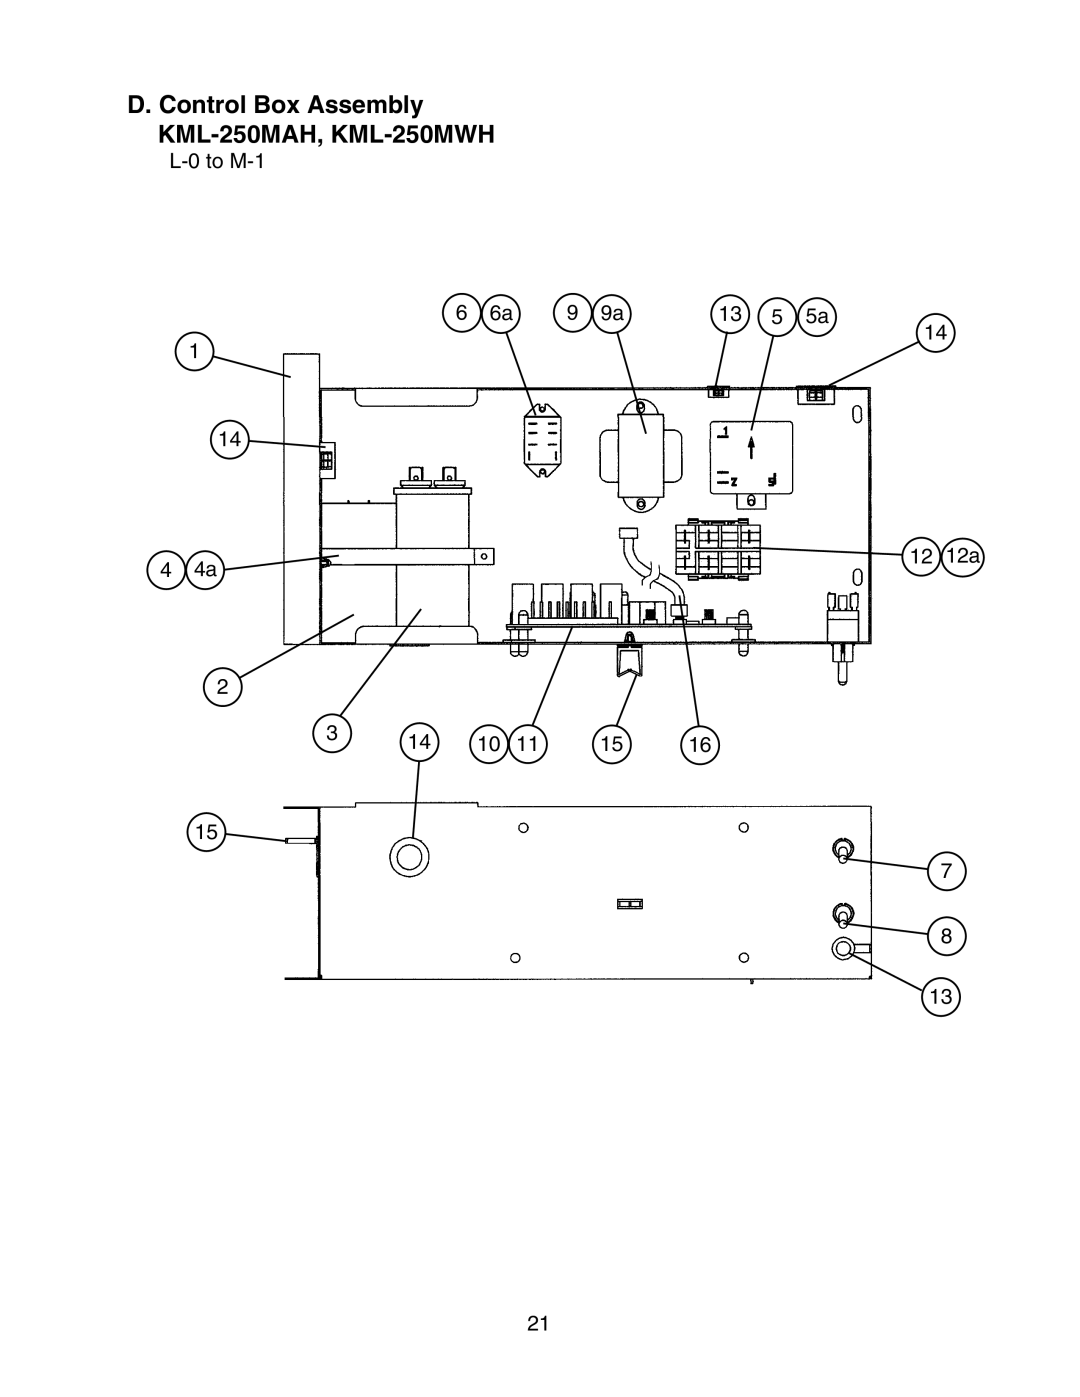 Hoshizaki manual D. Control Box Assembly KML-250MAH, KML-250MWH, L-0to M-1 